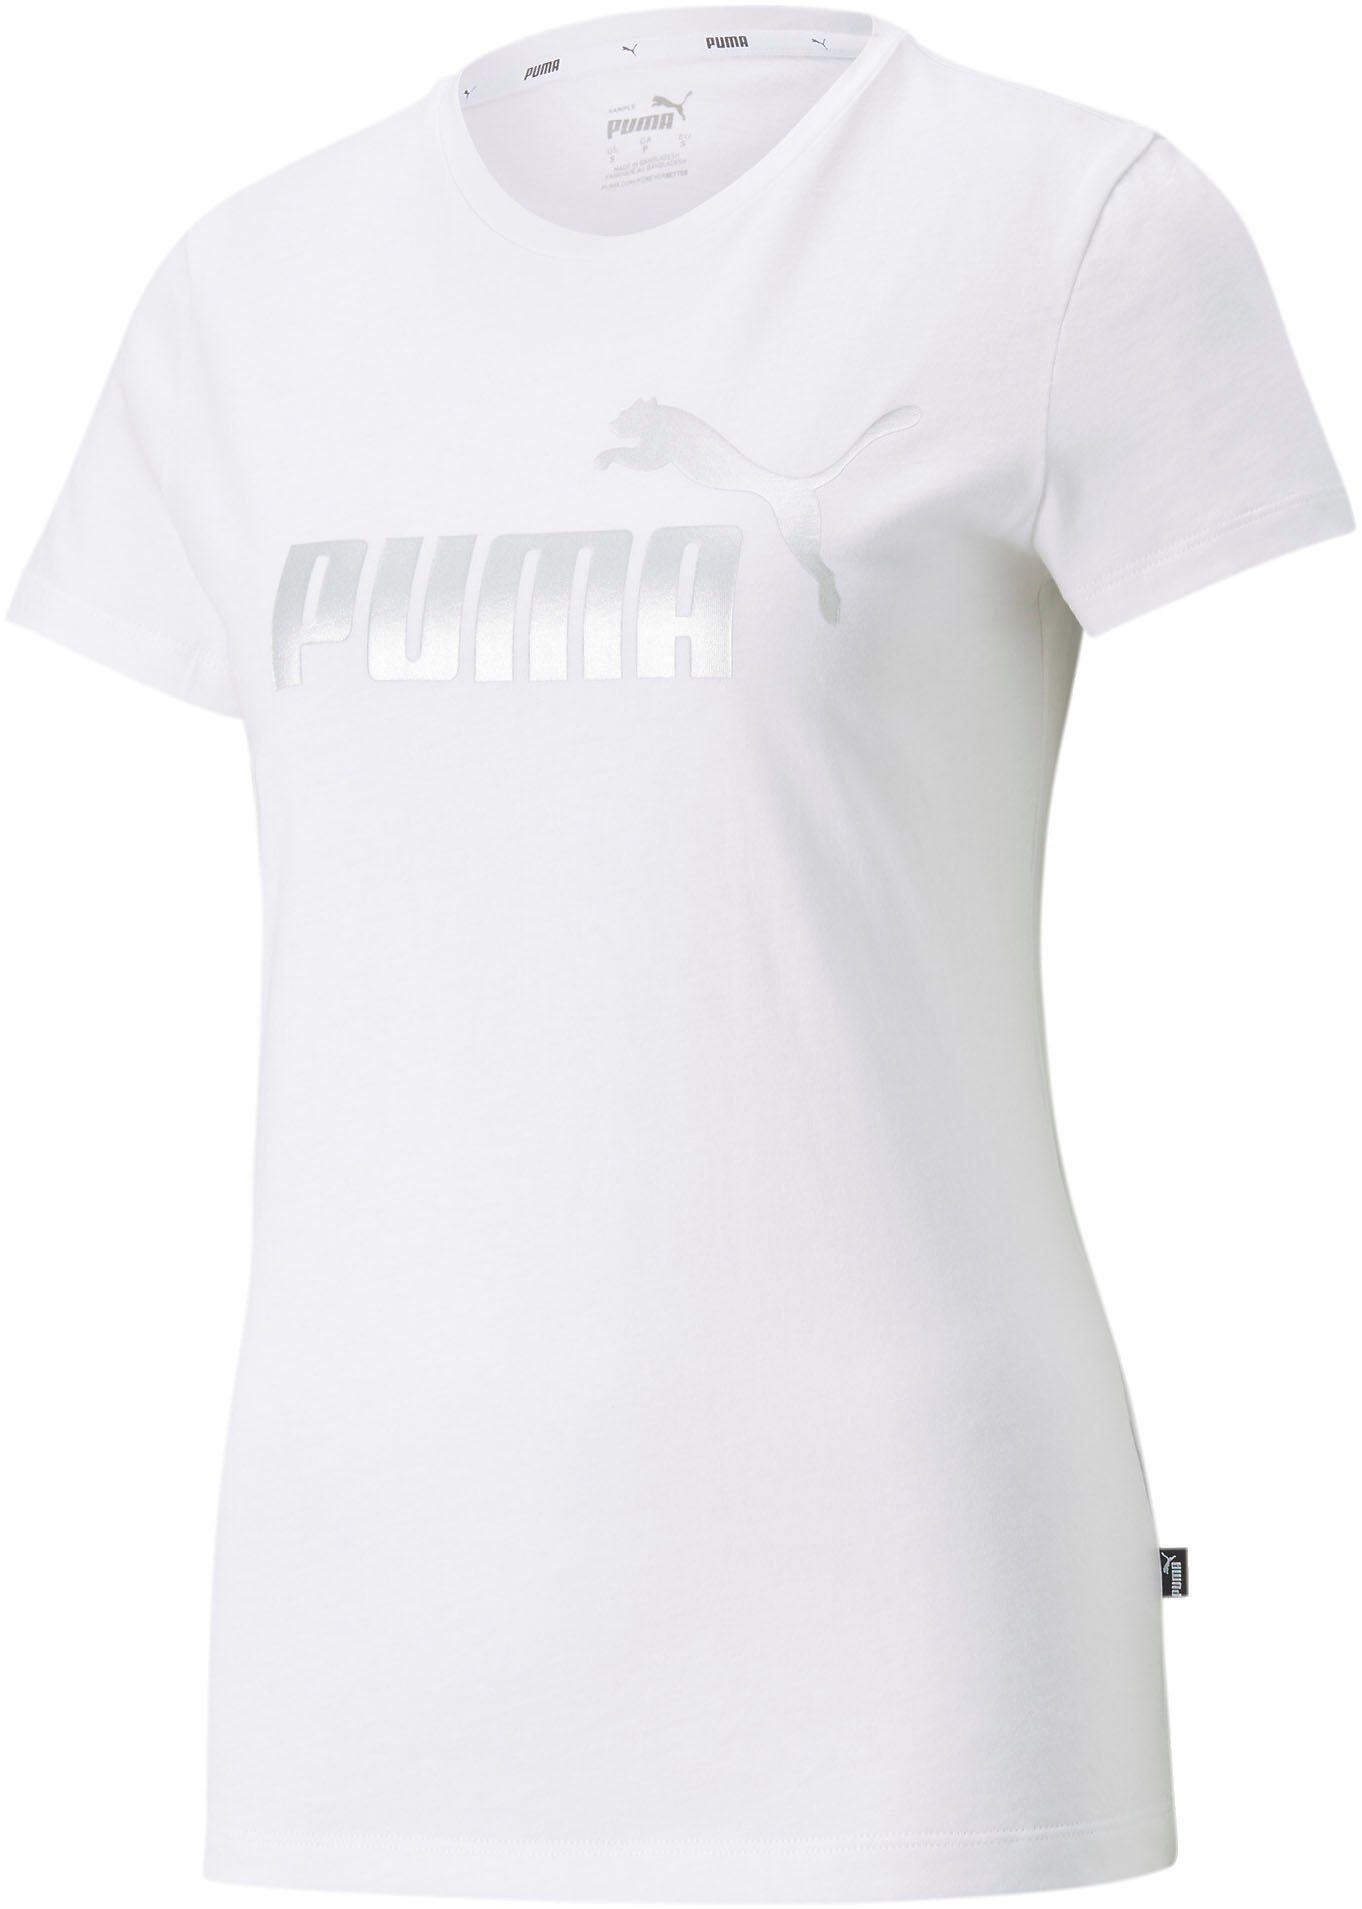 metallic PUMA TEE METALLIC ESS+ T-Shirt White-silver LOGO Puma